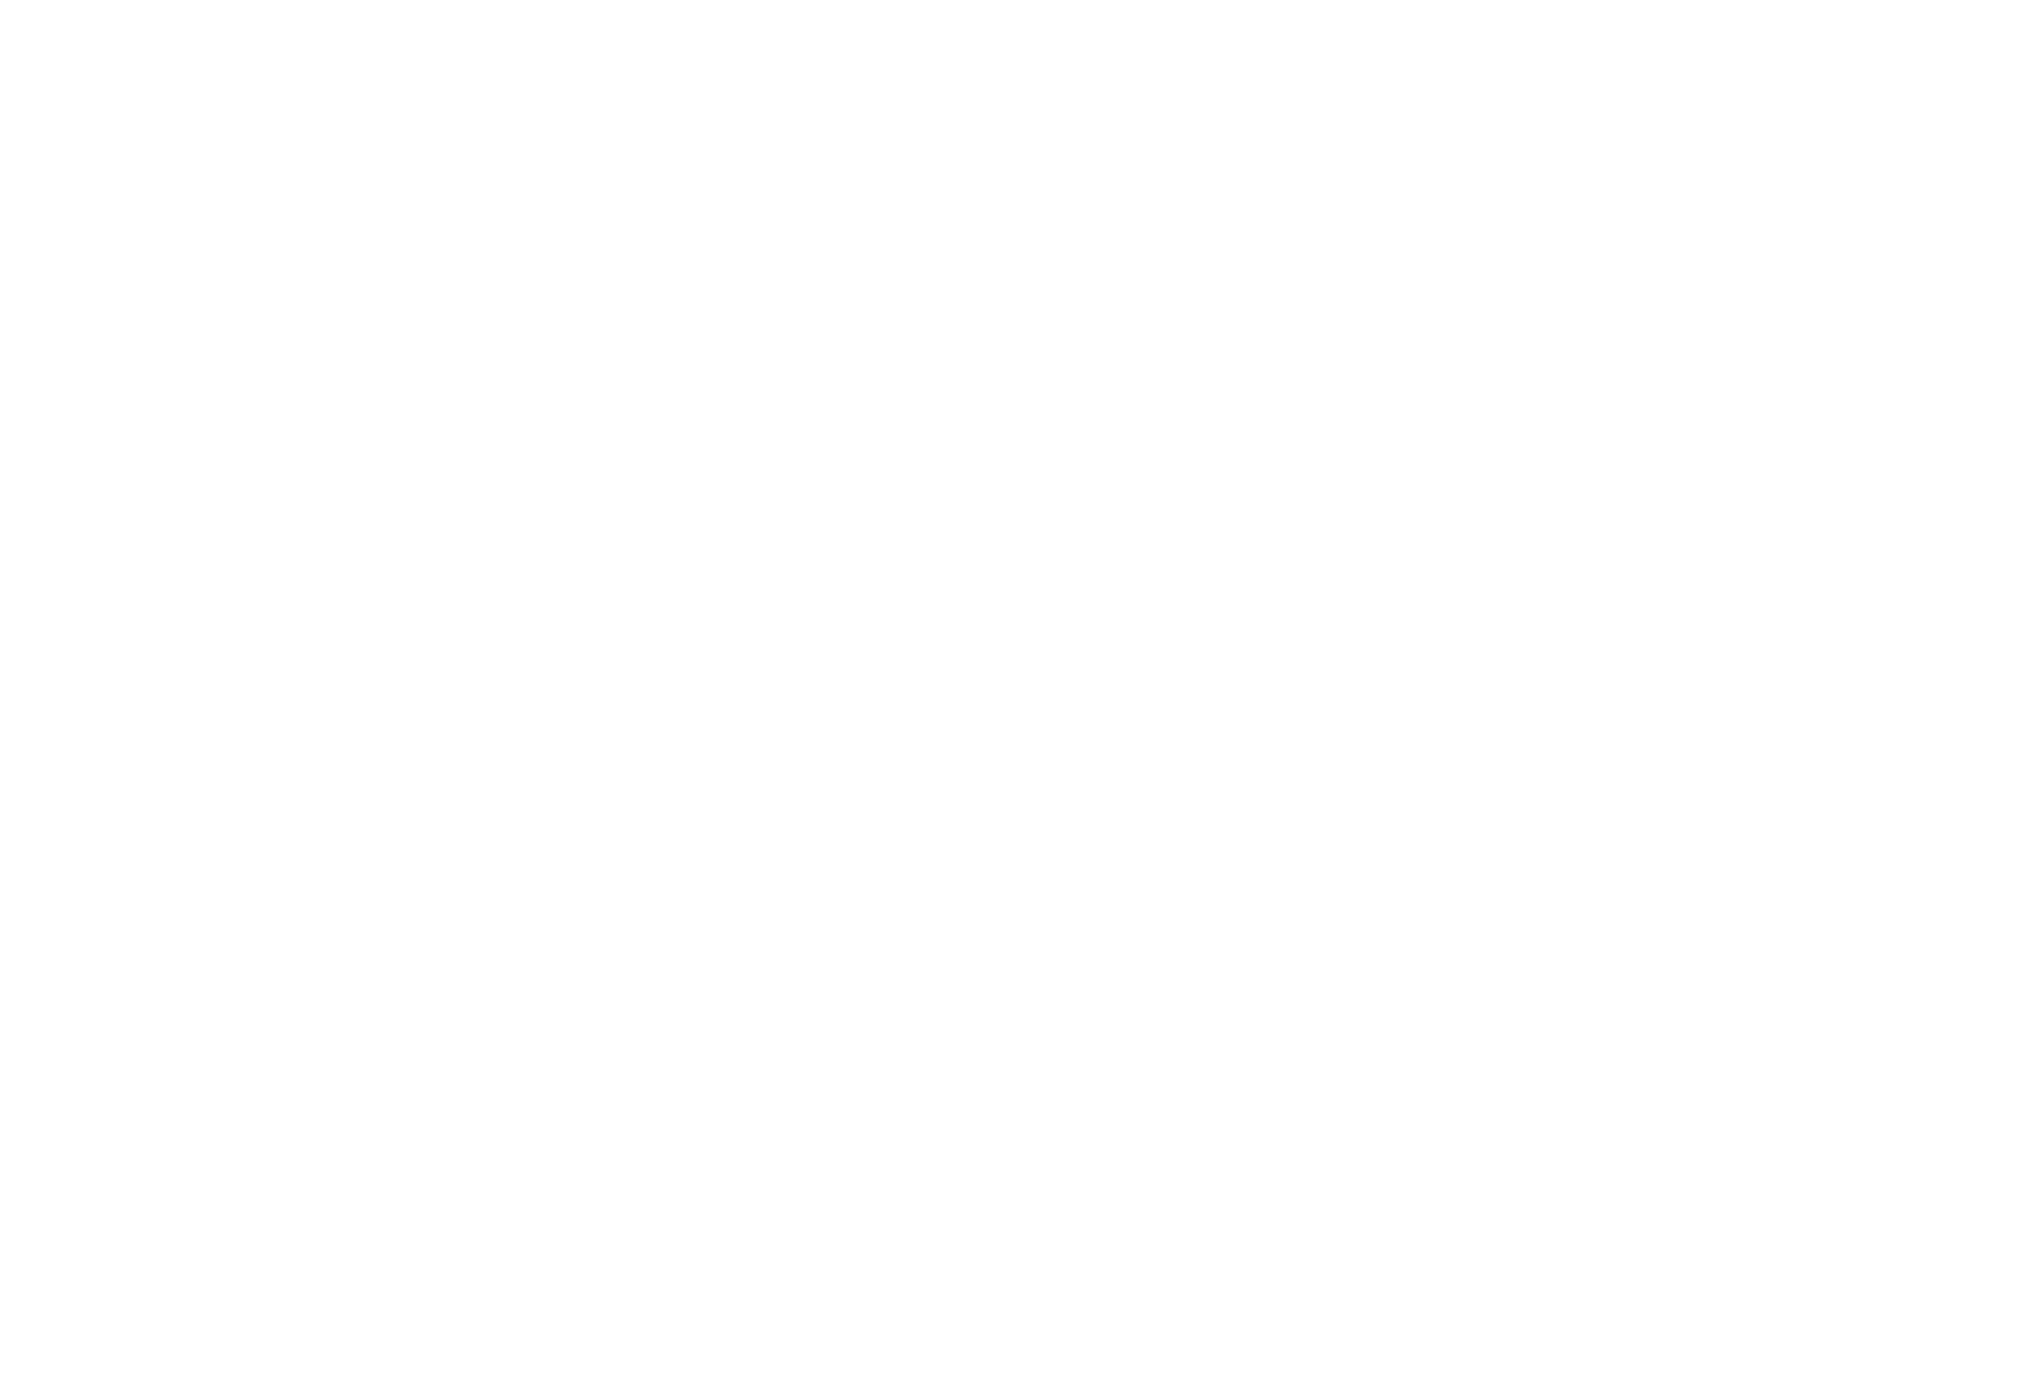 Authorizing for All - LOGO white